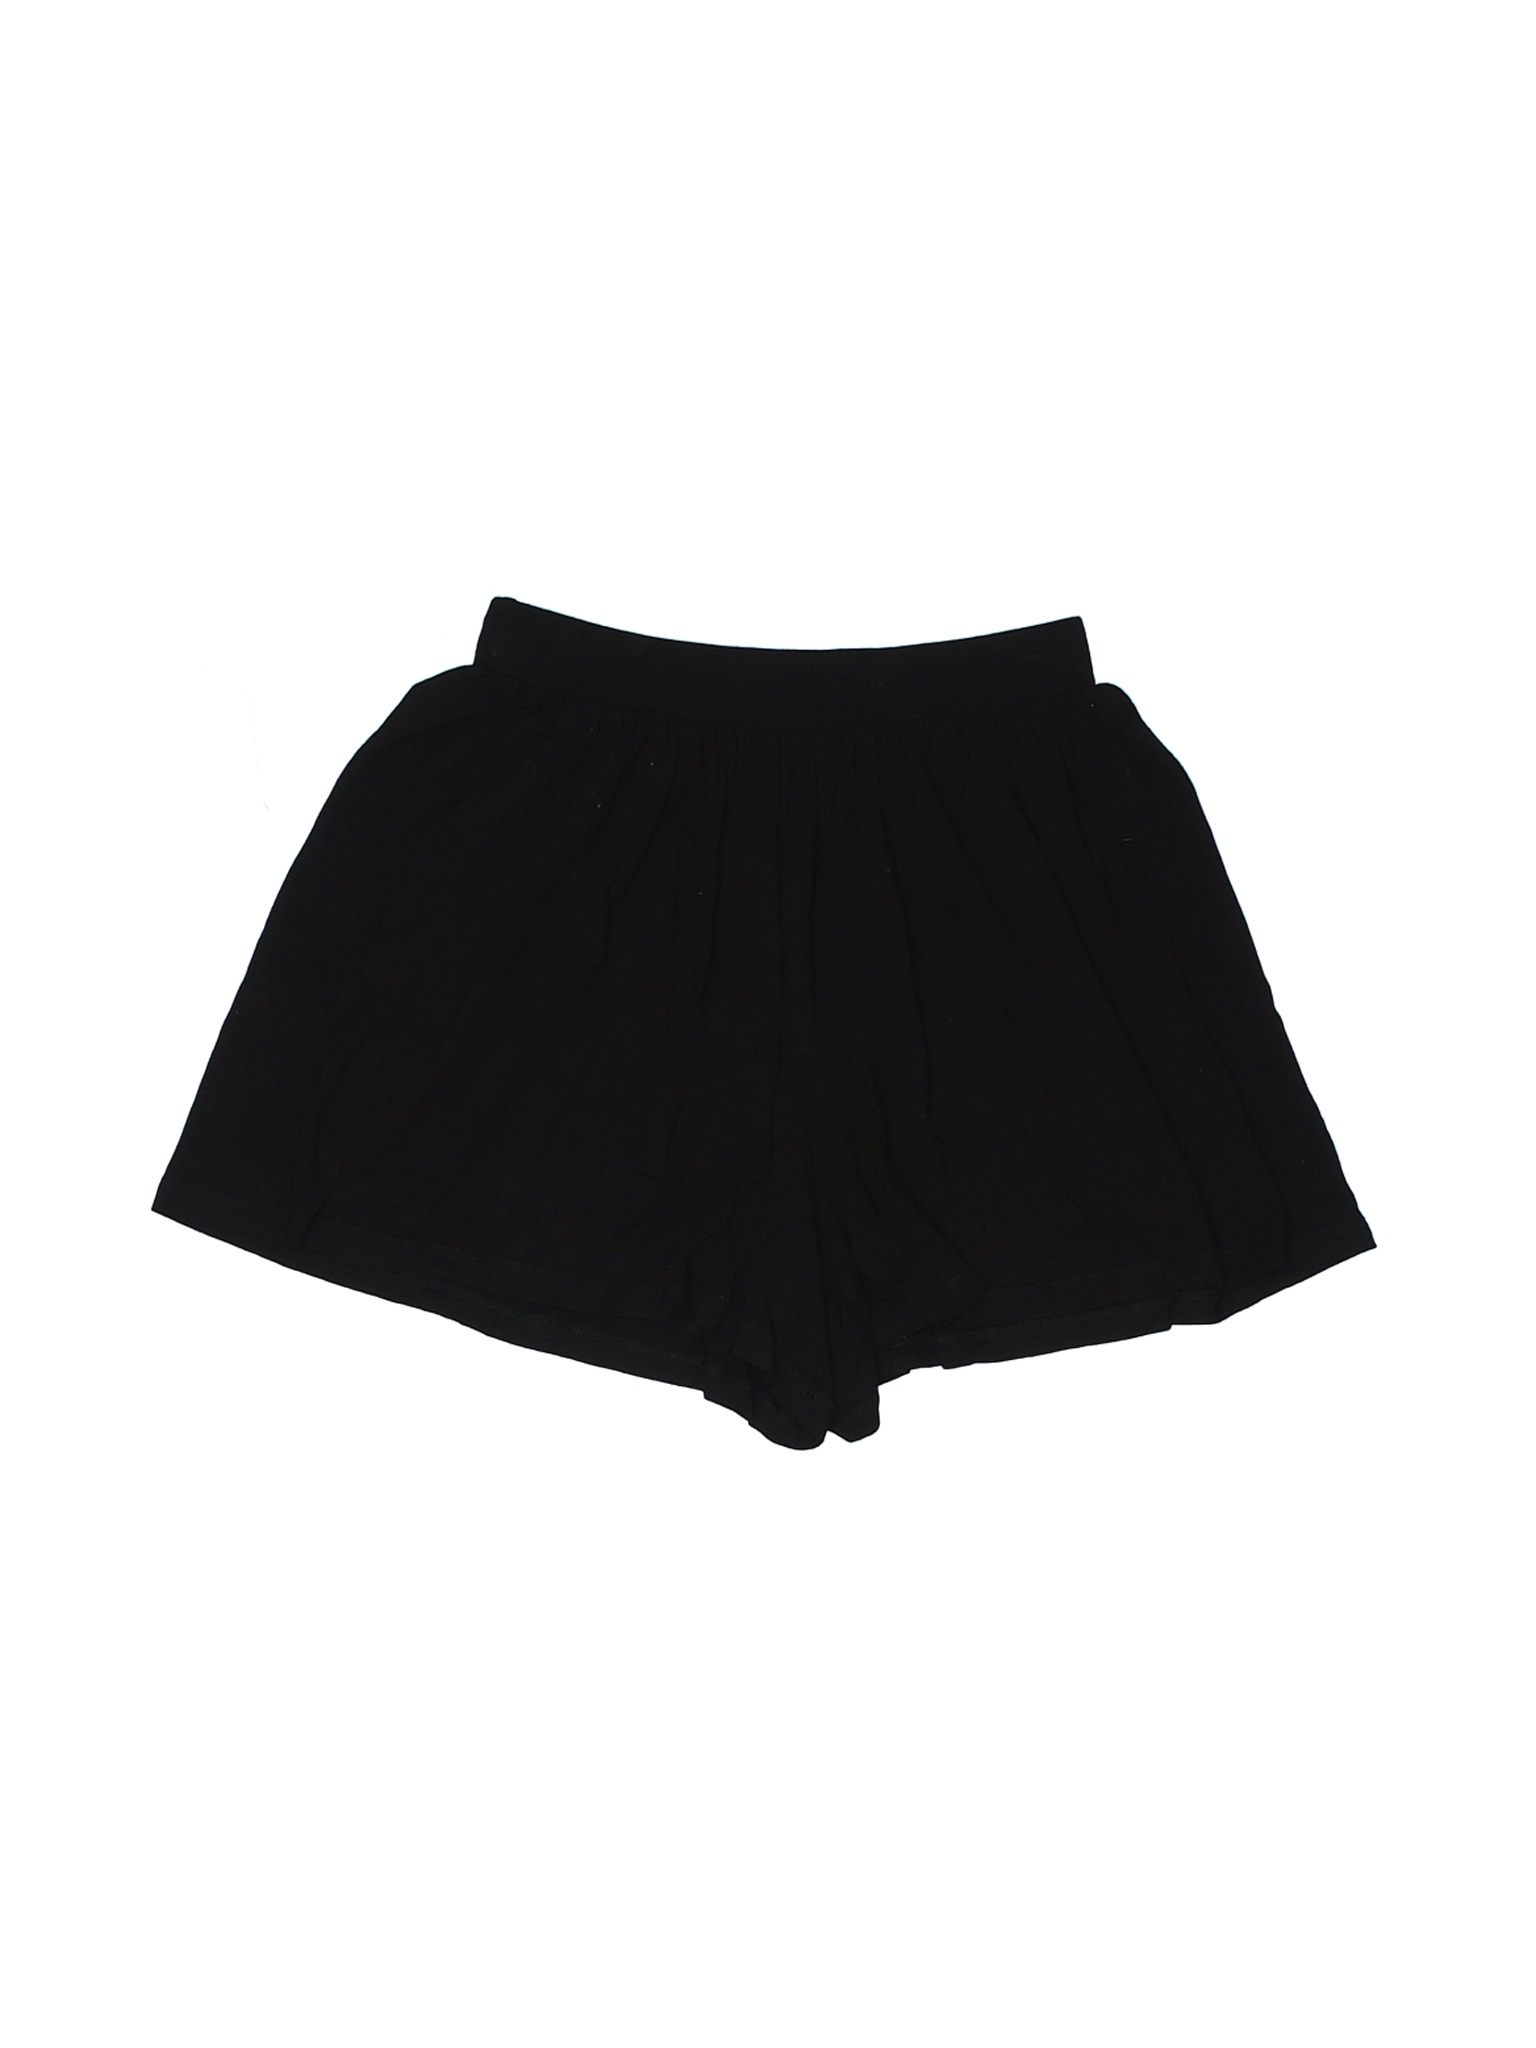 ASOS Women Black Shorts 4 | eBay